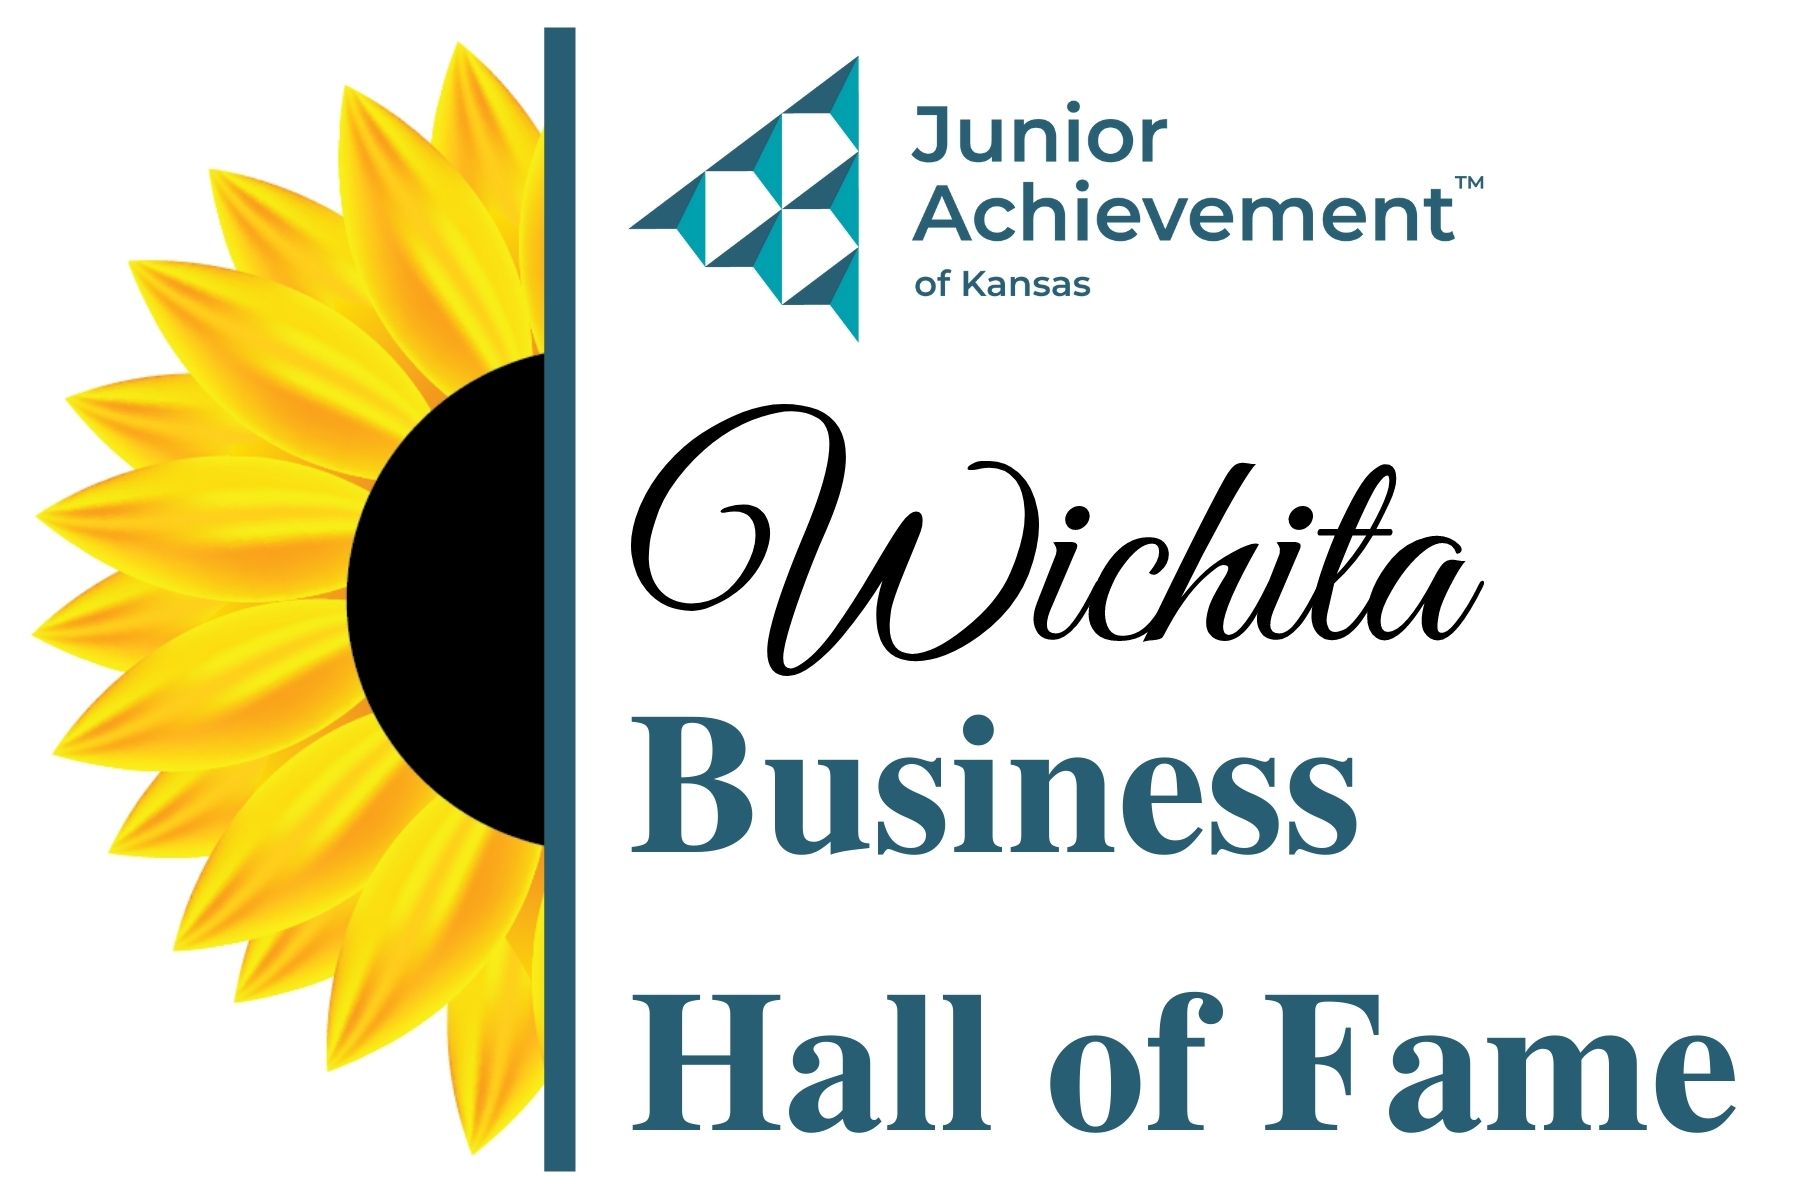 Junior Achievement of Kansas, Inc.